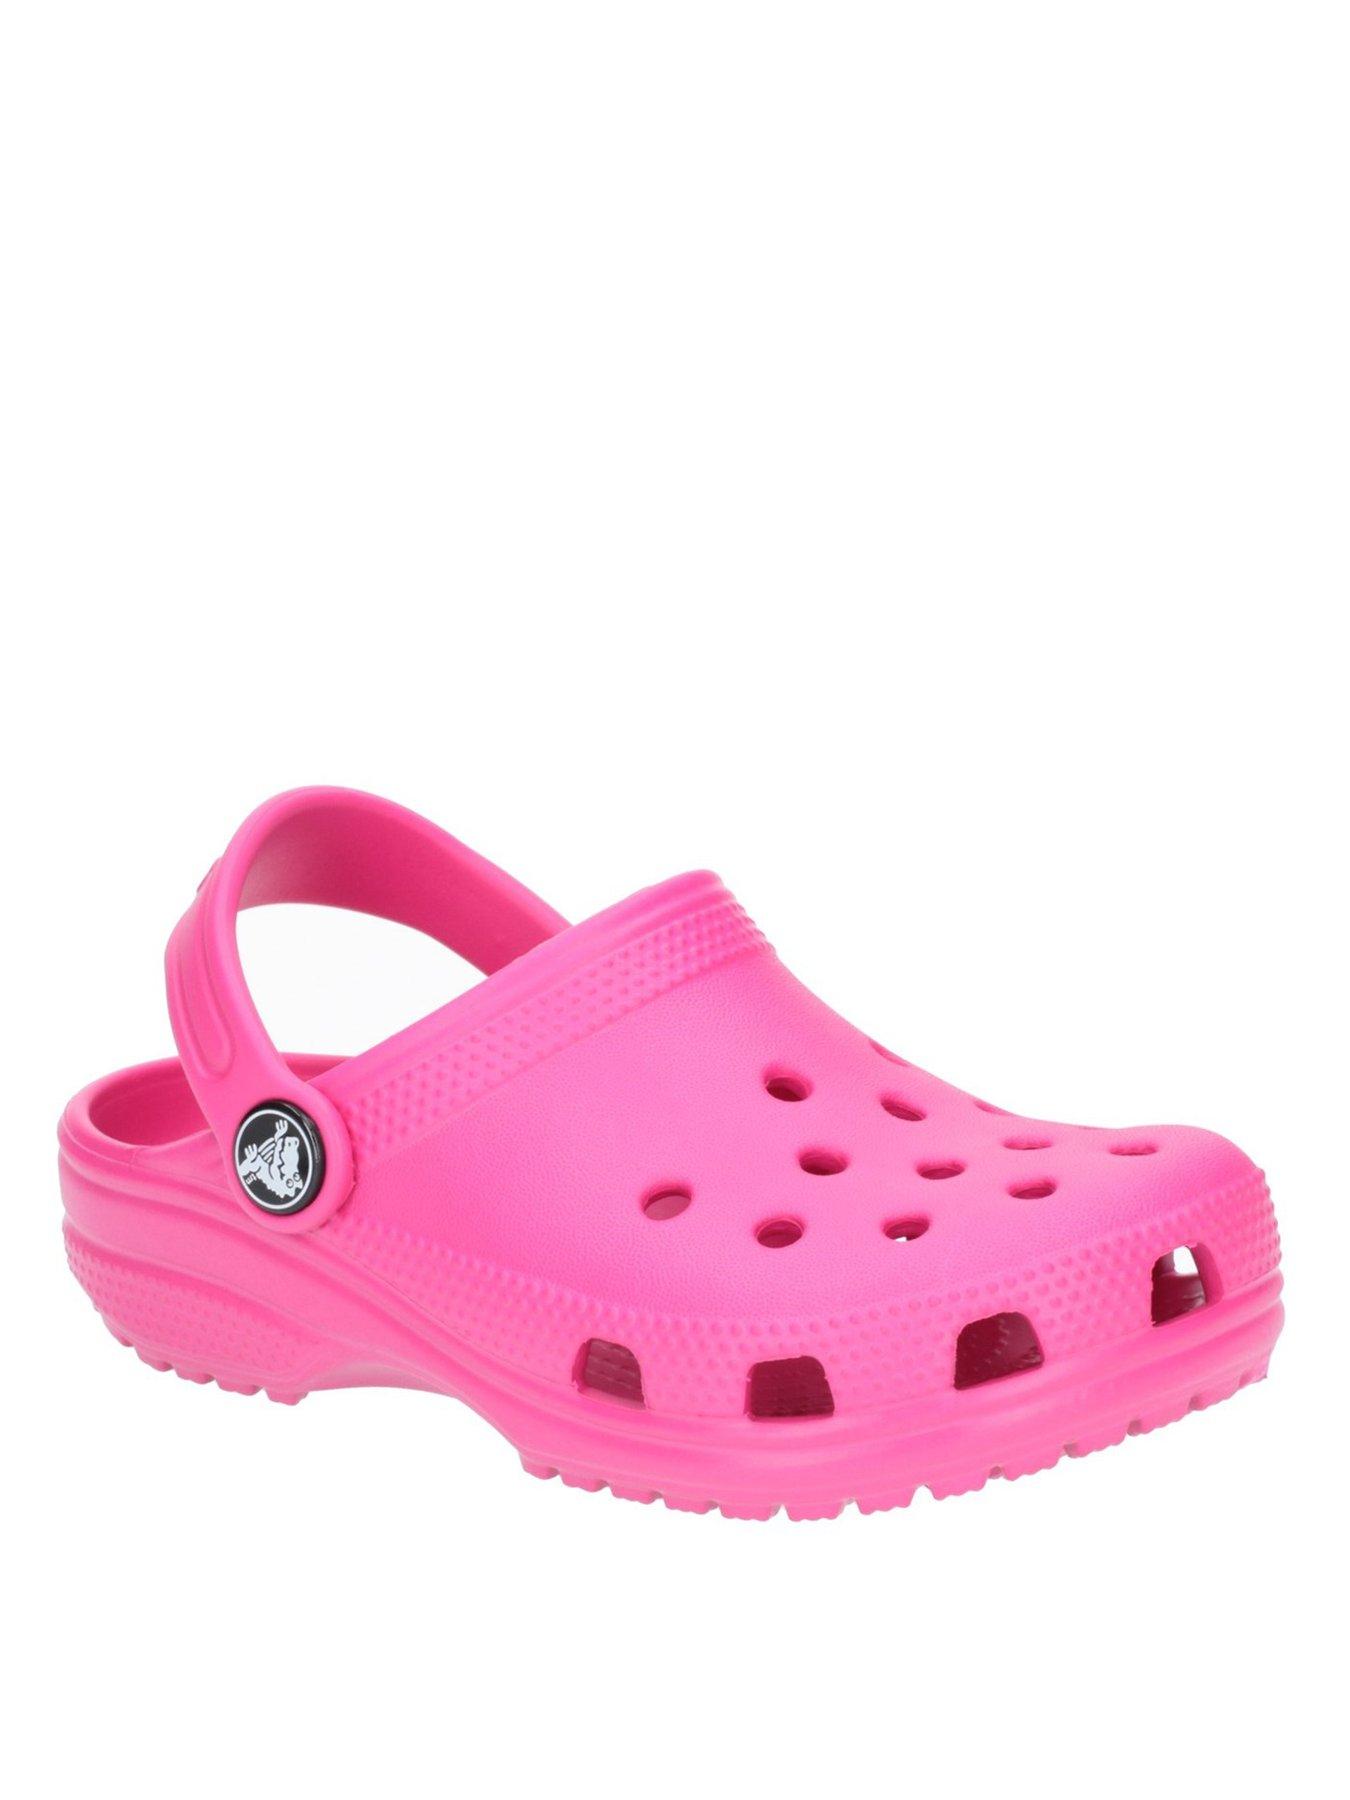 crocs girls size 6